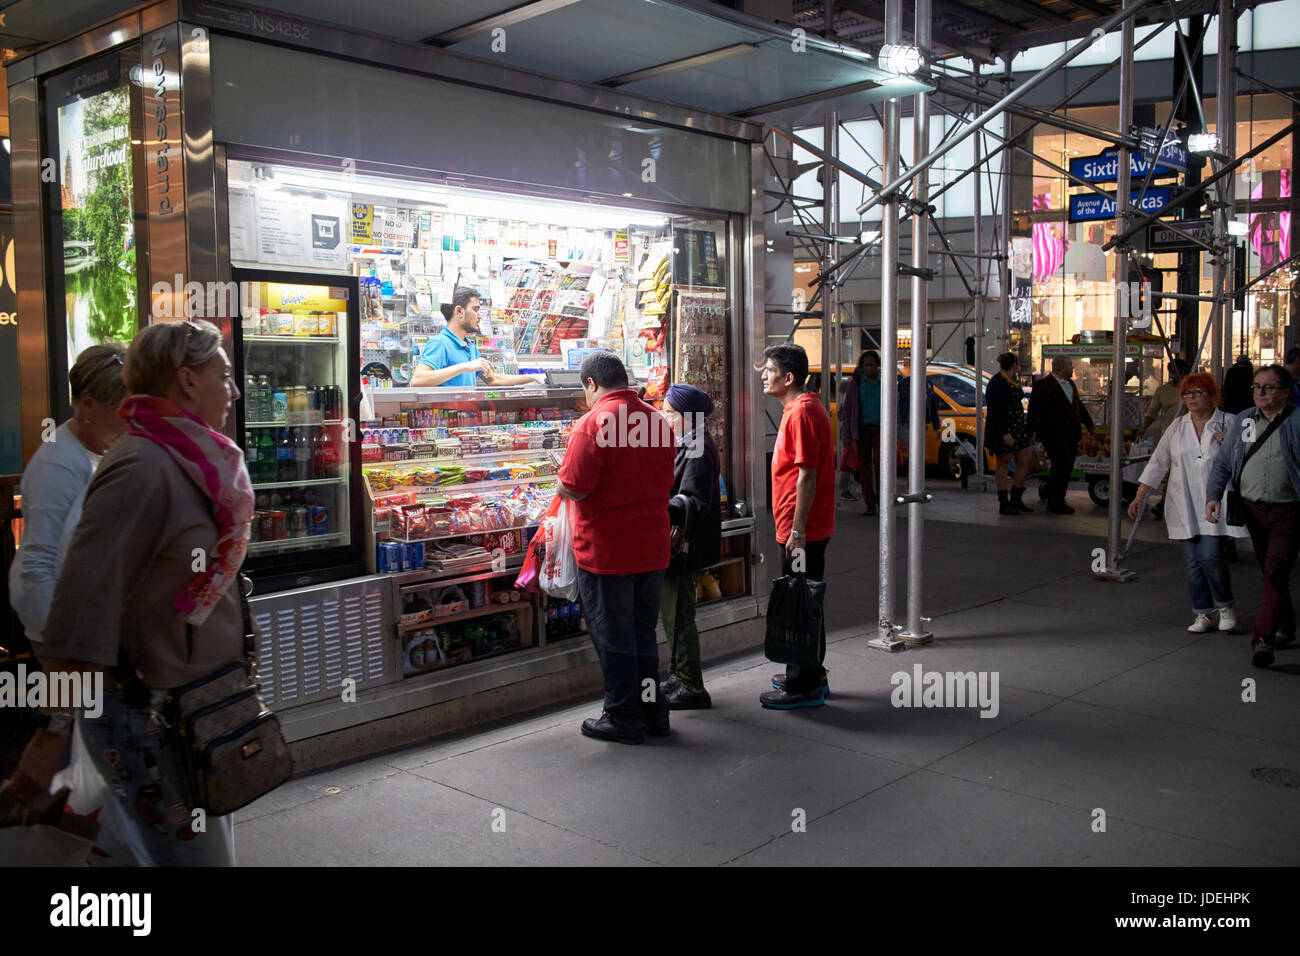 customers at a newstand at night New York City USA Stock Photo